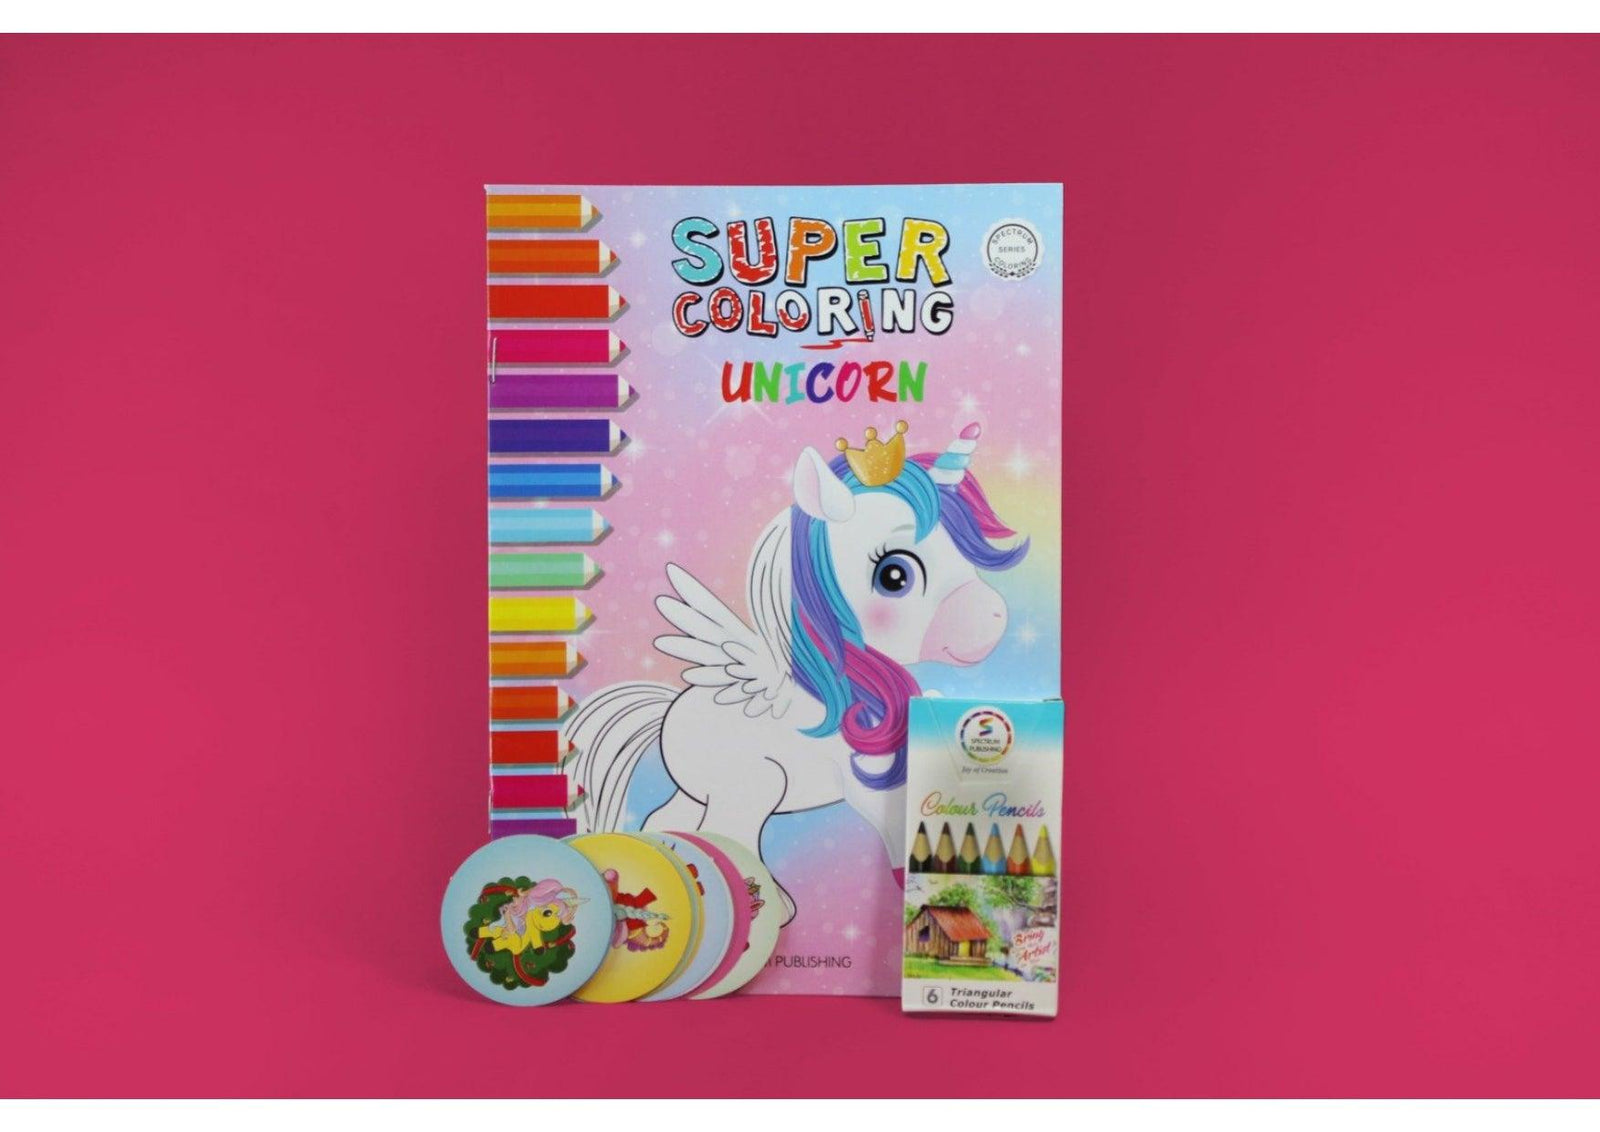 Super coloring unicorn book - Ourkids - Spectrum Publishing